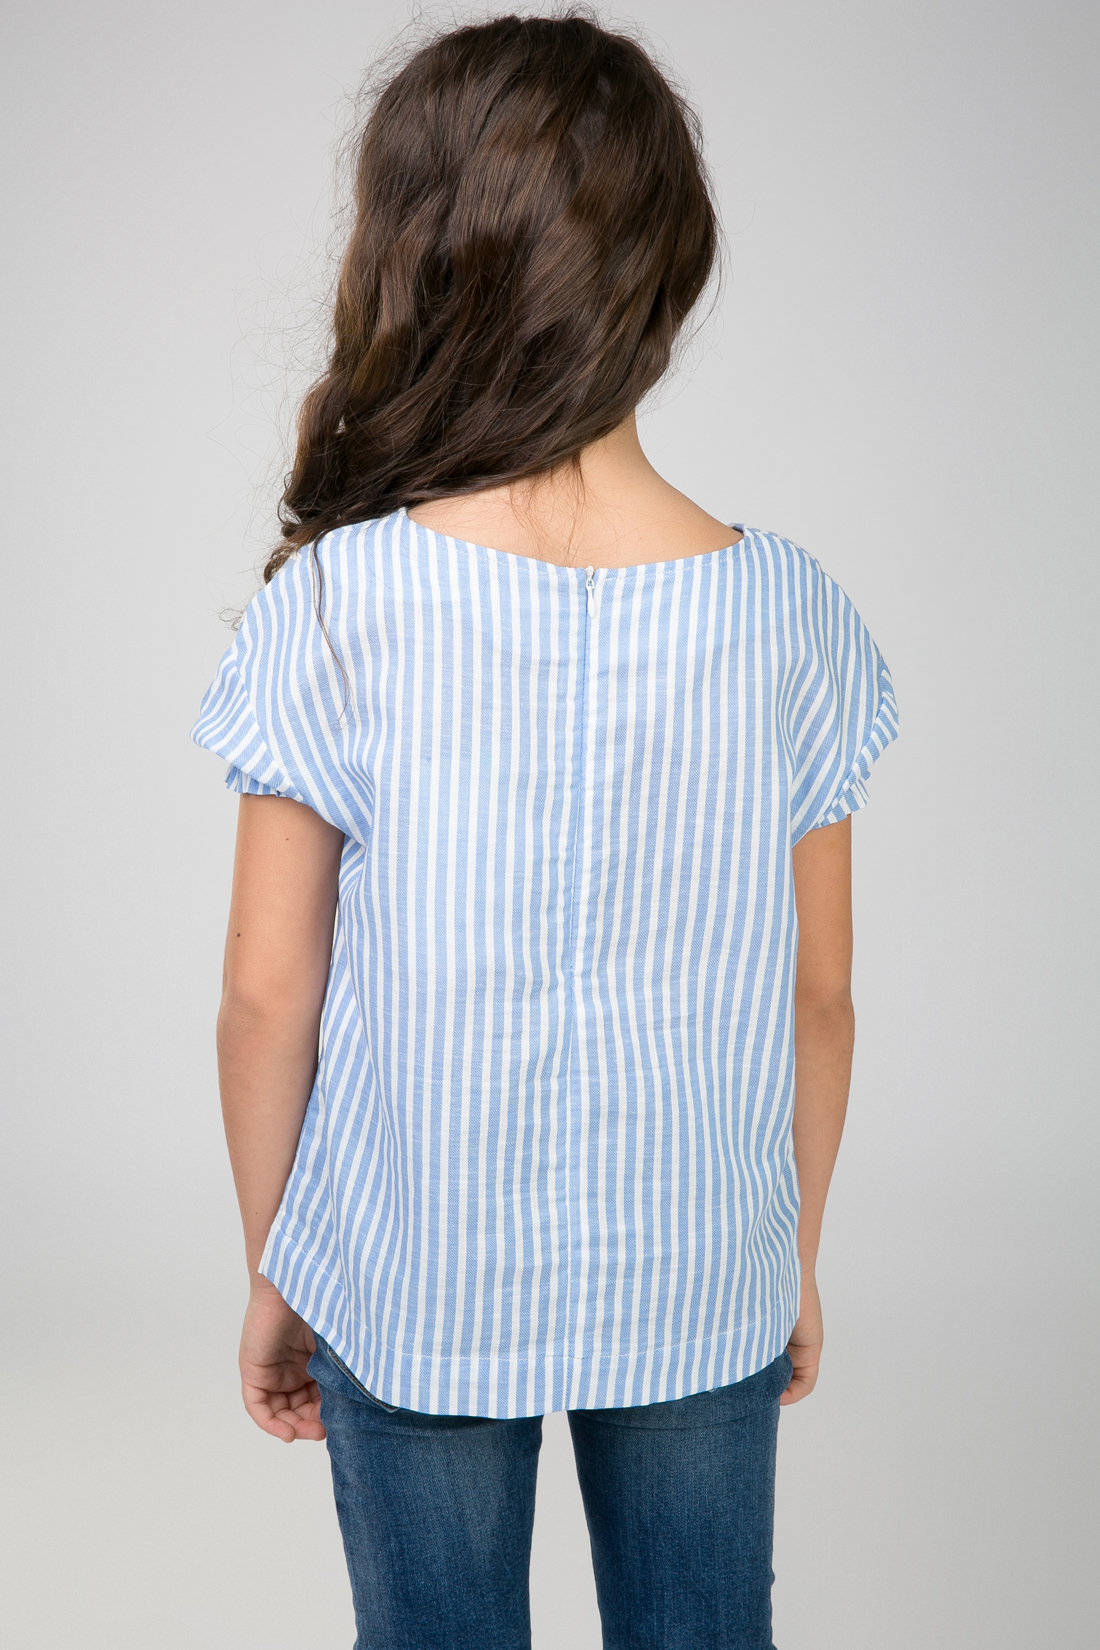 Блузка для девочки (арт. baon BJ198002), размер 134-140, цвет angel blue striped#голубой Блузка для девочки (арт. baon BJ198002) - фото 2